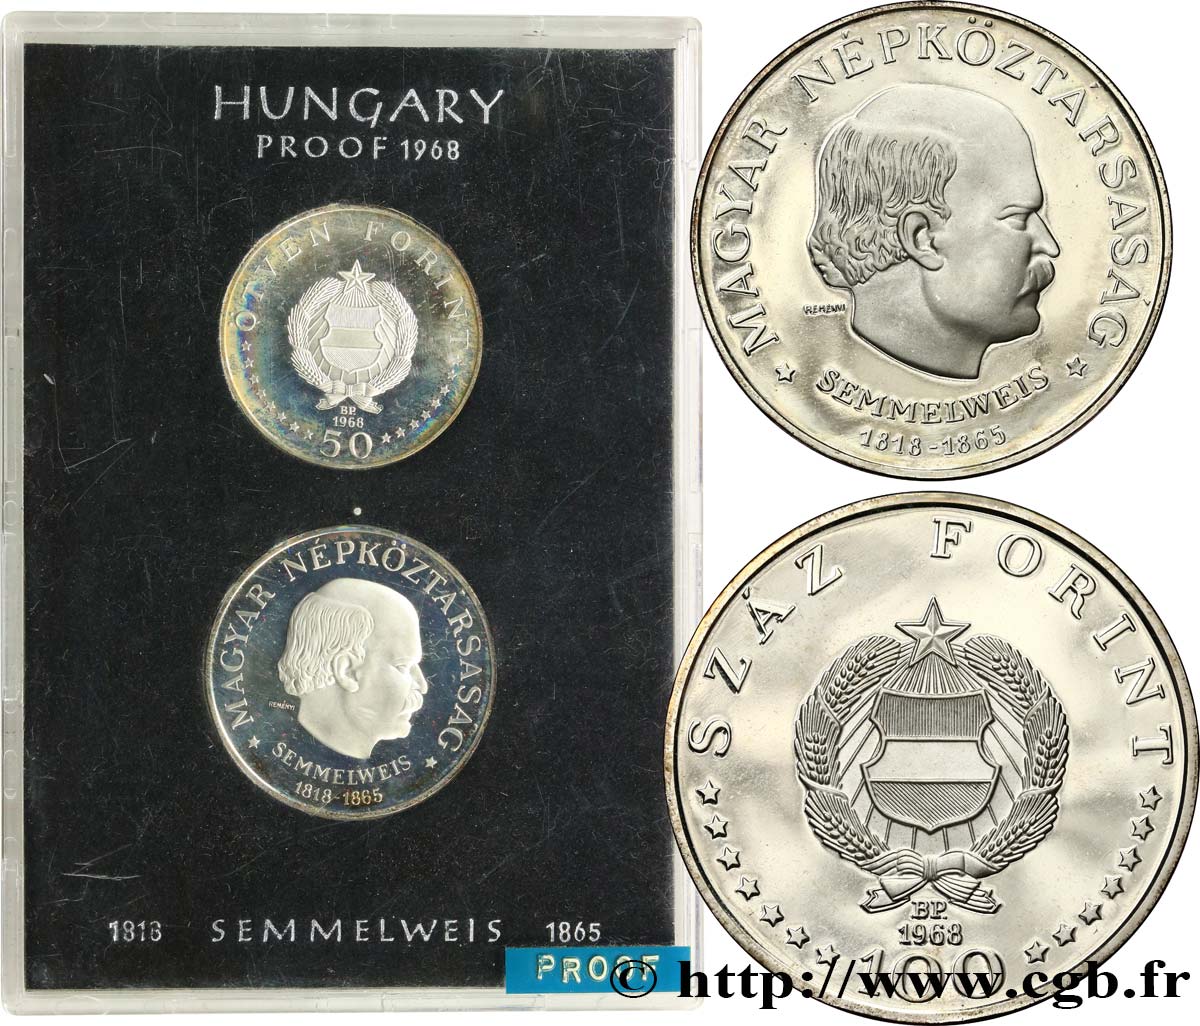 UNGHERIA Série Proof - 2 monnaies - Ignác Semmelweis 1968 Budapest BE 